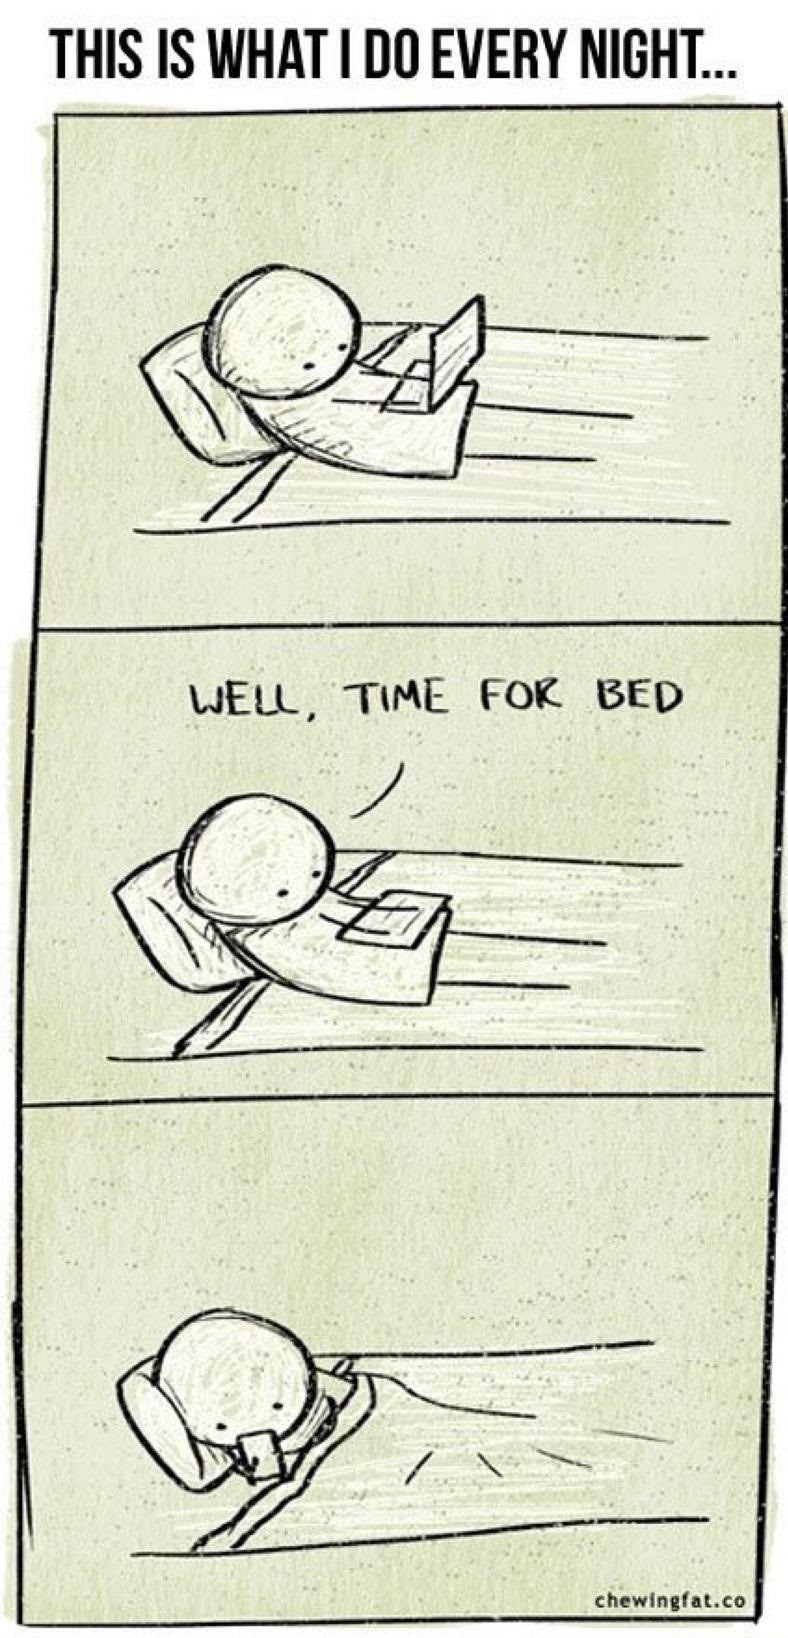 comics-time-sleep-bed-internet